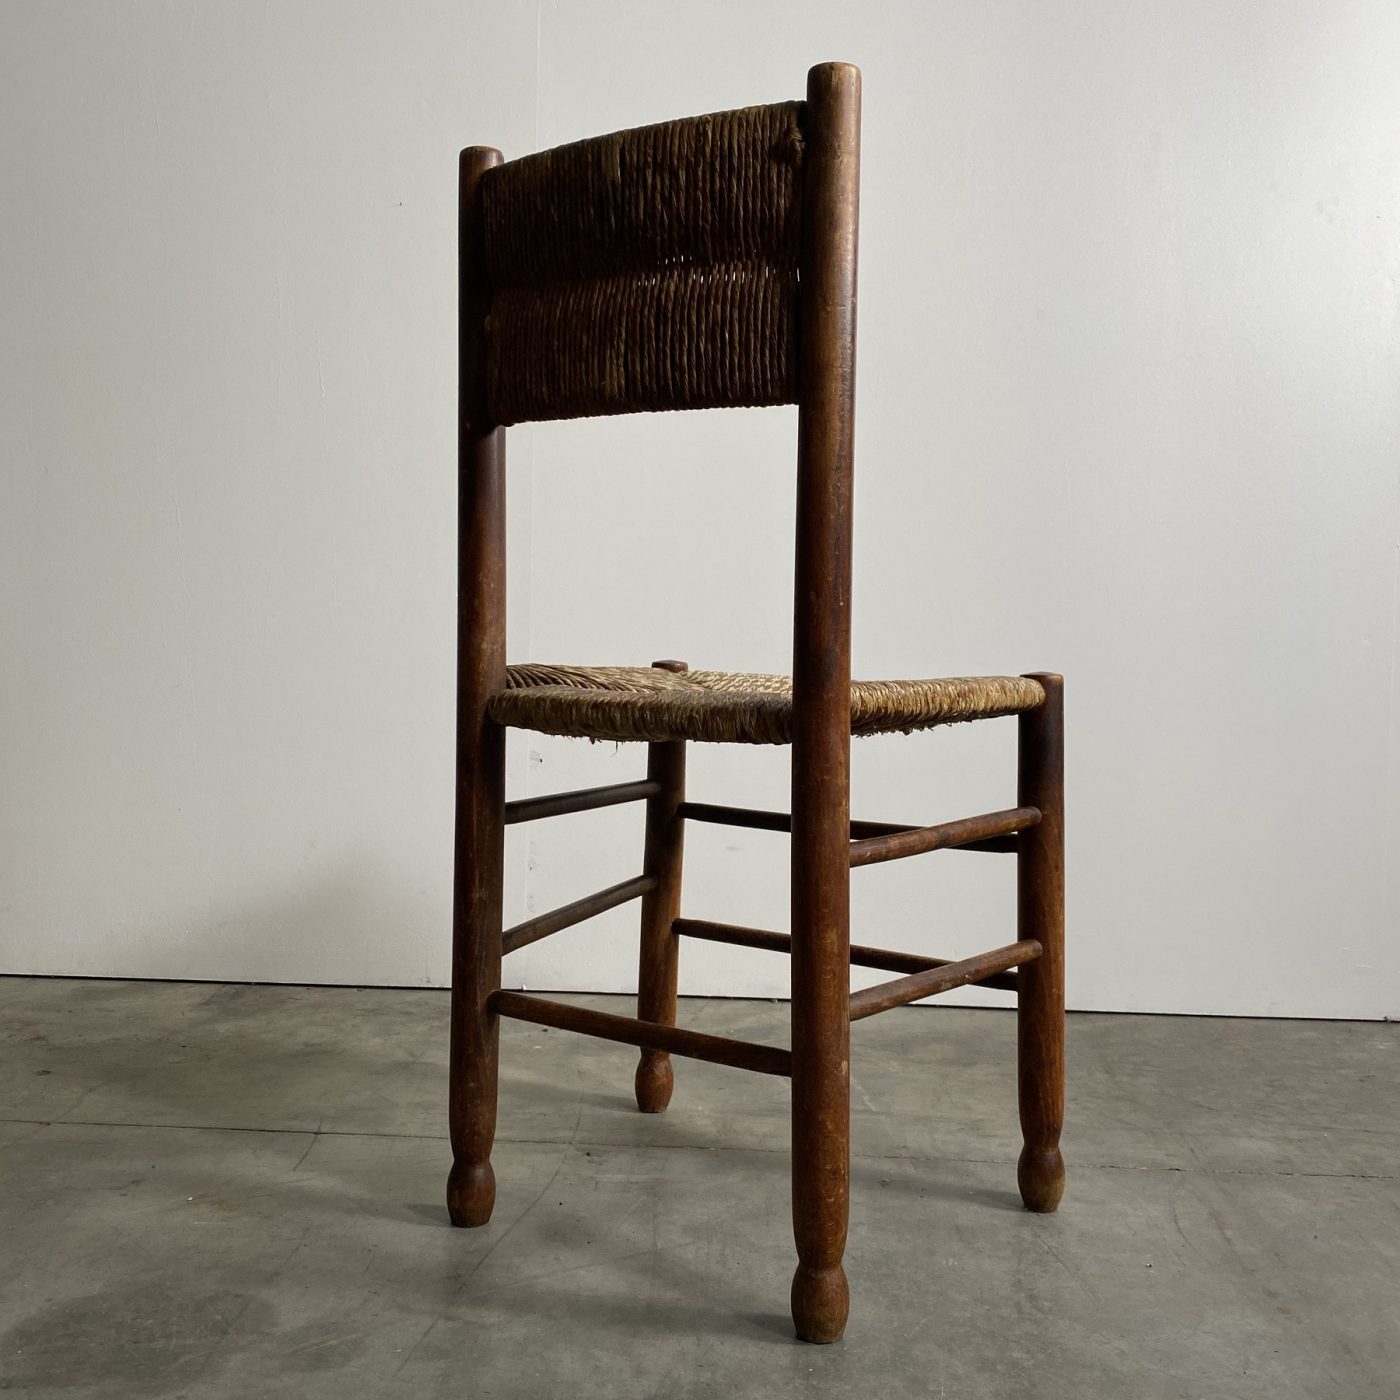 objet-vagabond-rustic-chairs0005